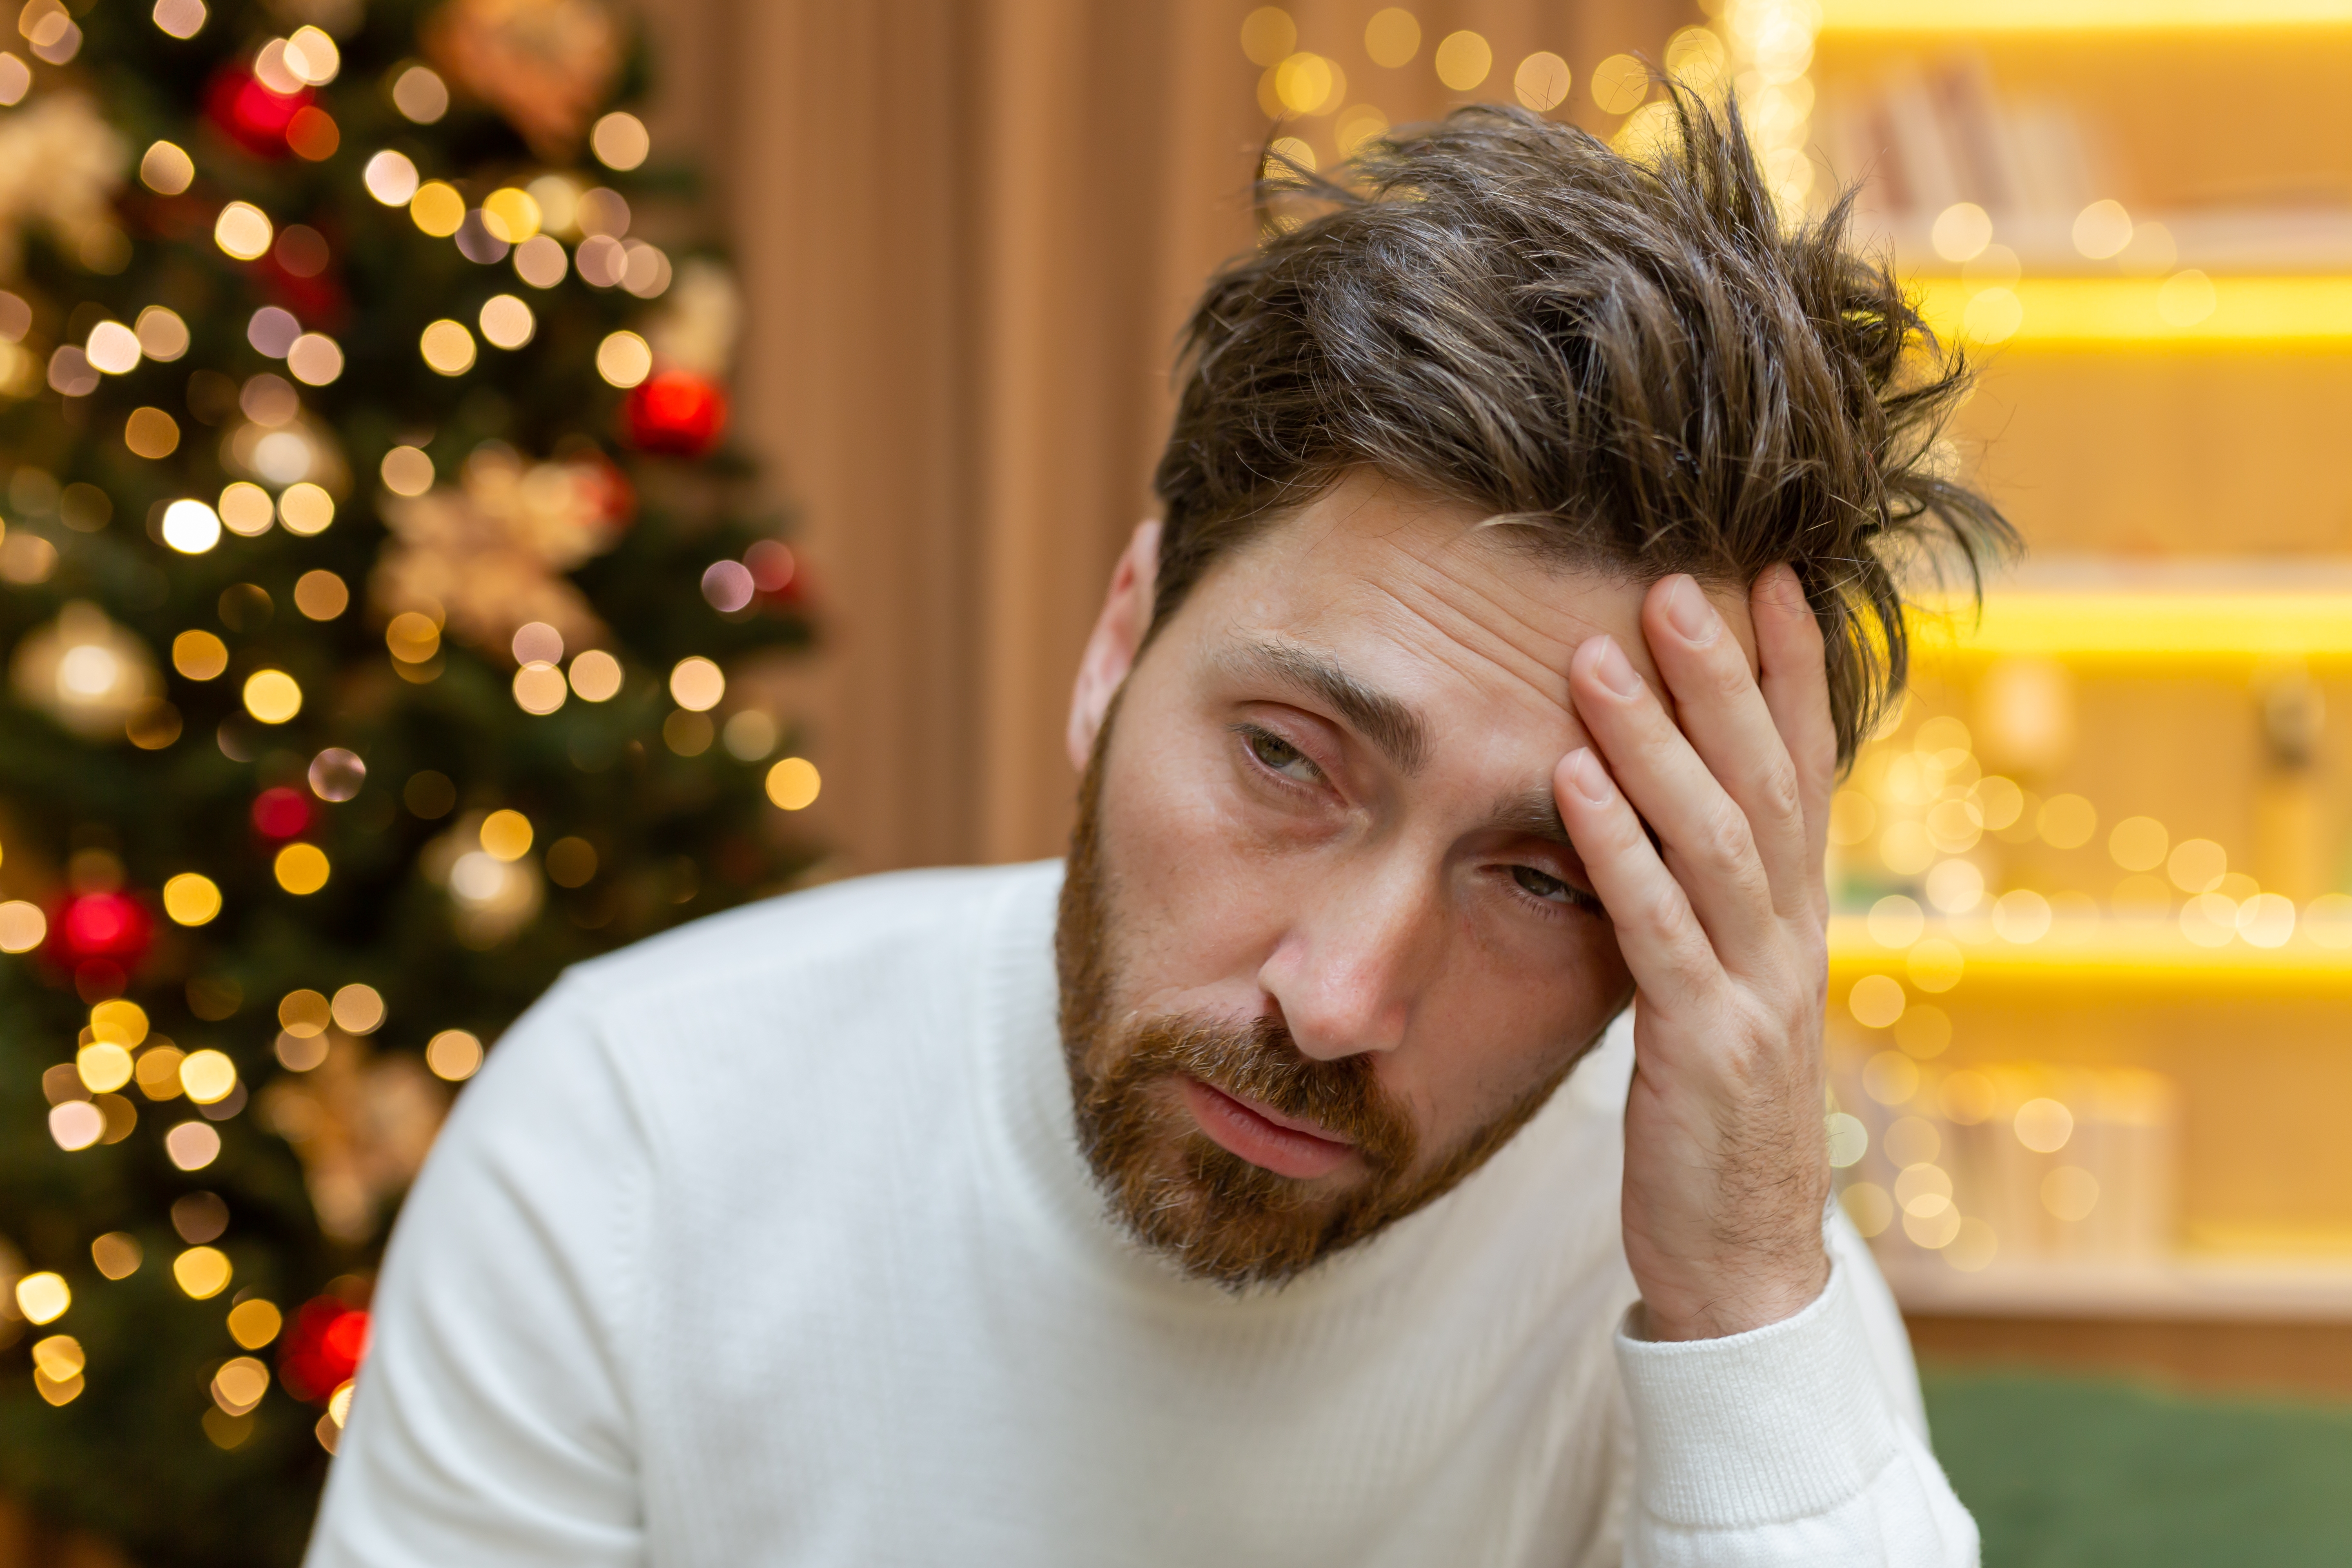 Sad depressed man | Source: Shutterstock